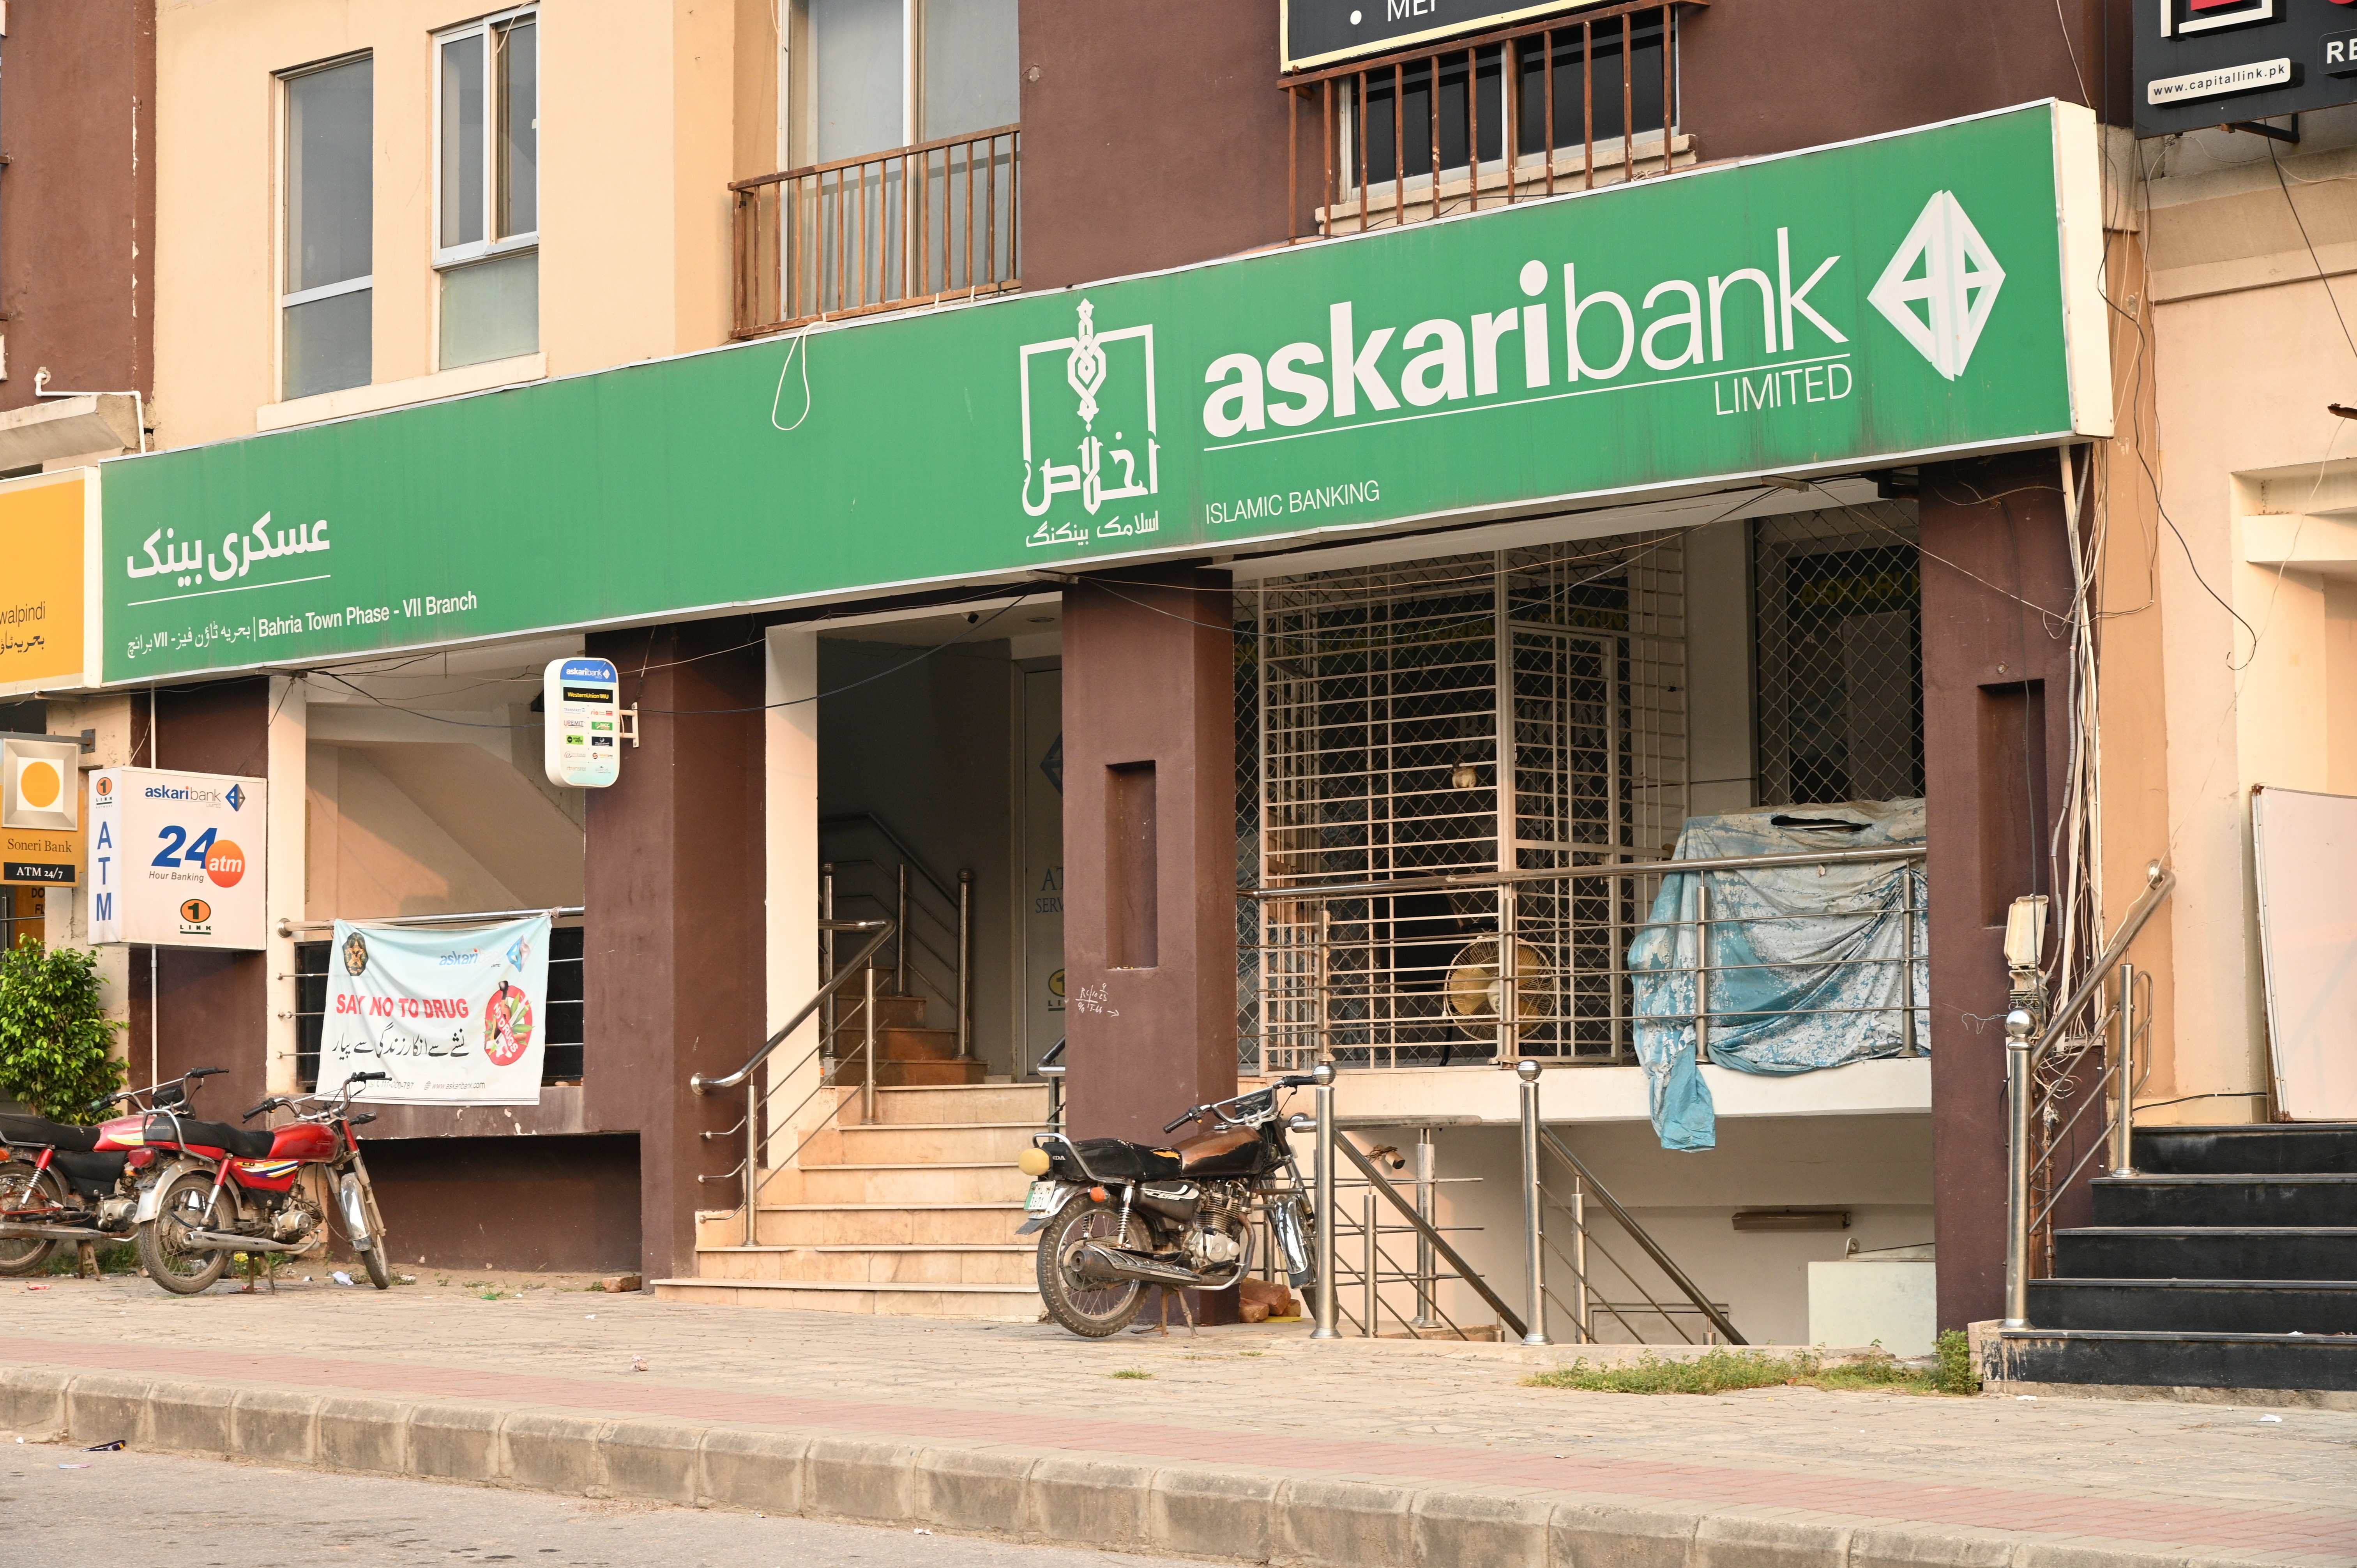 askaribank Limited Islamic Banking, Bahria Town Phase VII Branch